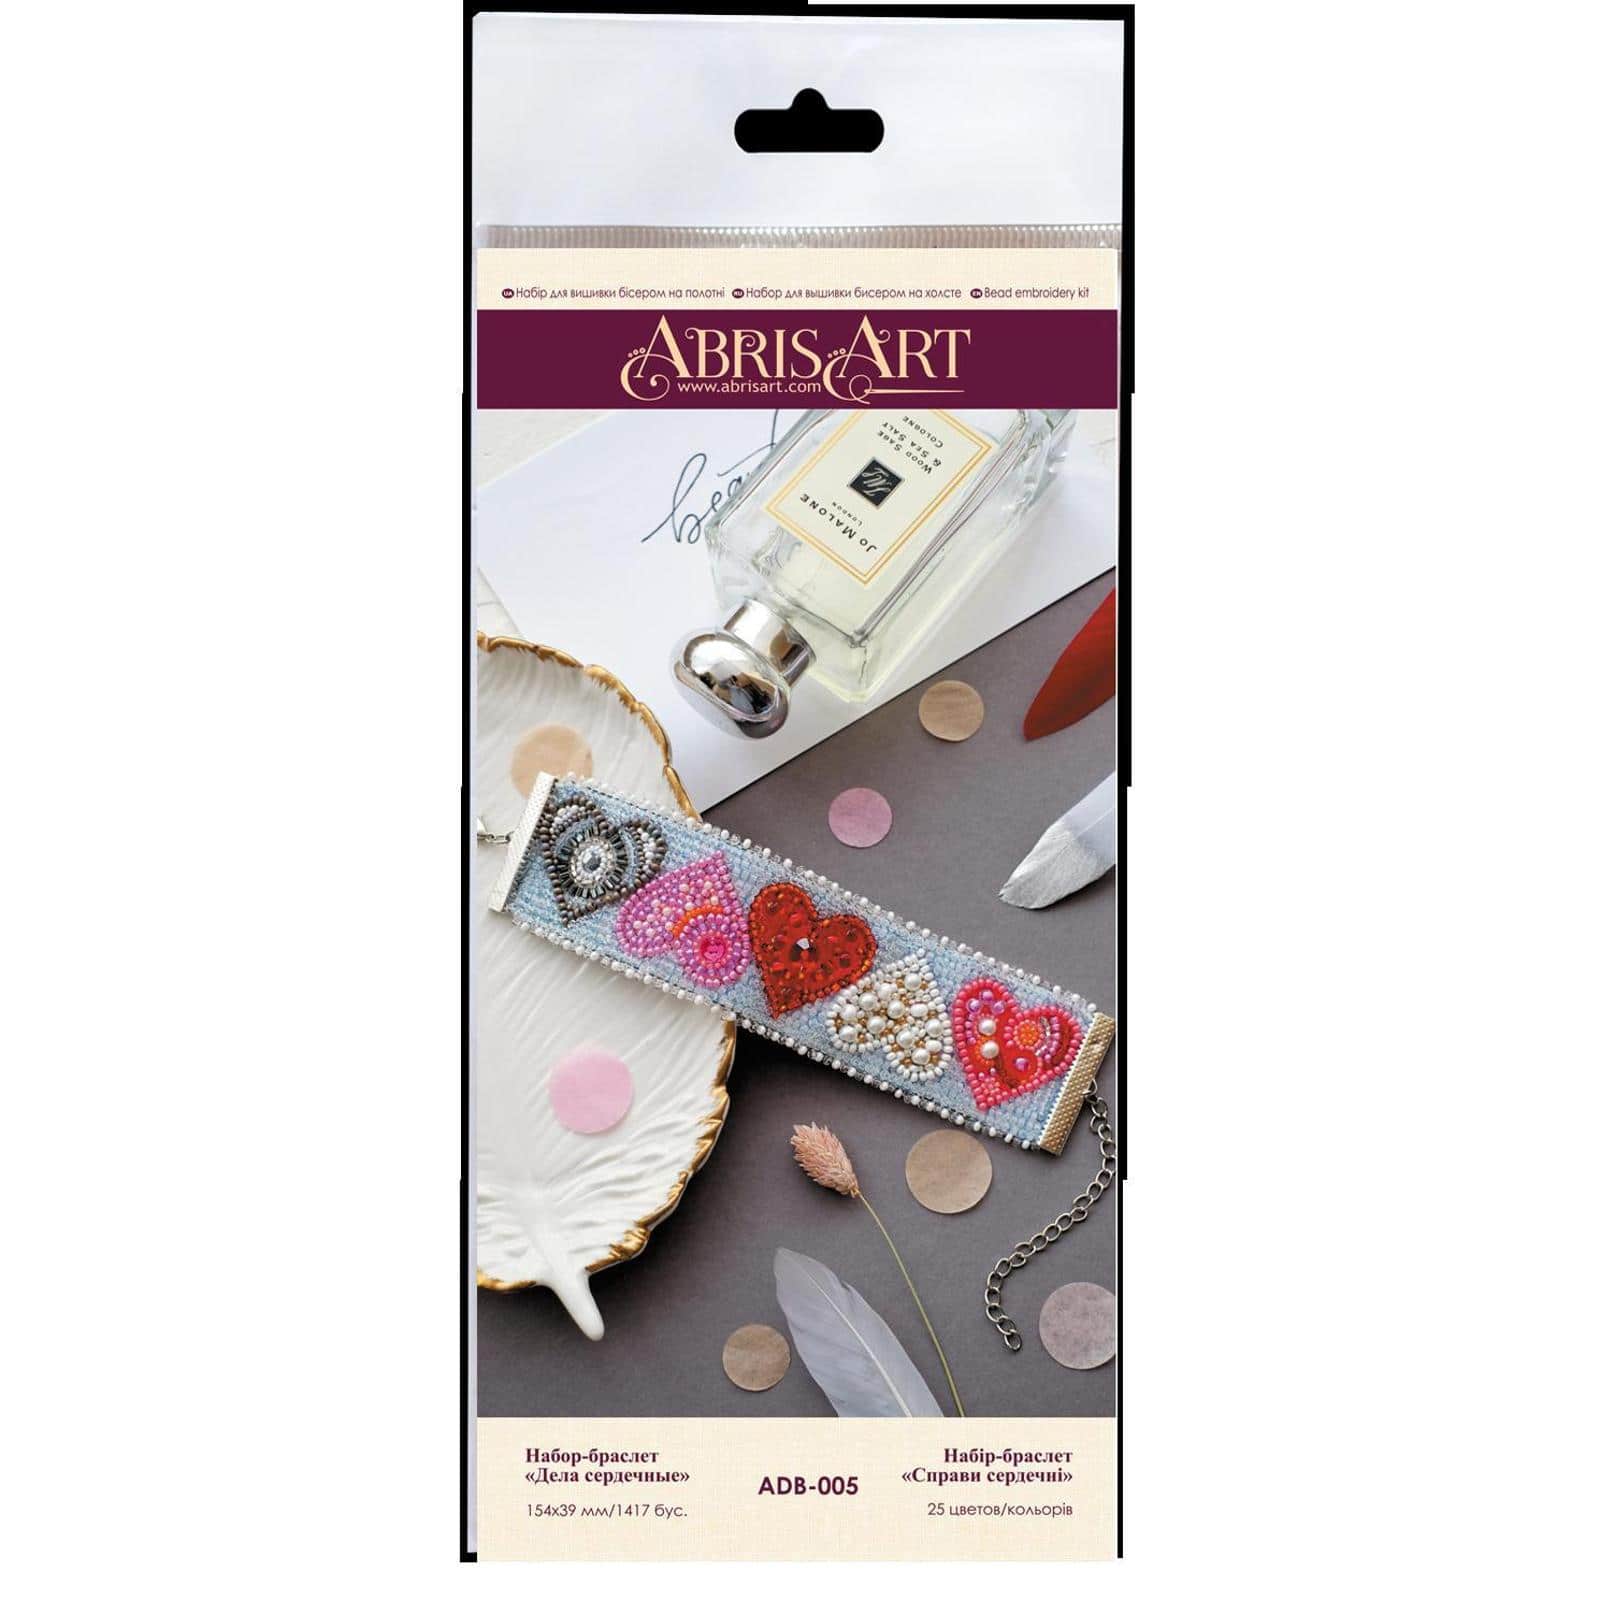 Abris Art Decoration Cordial Affairs Bead Embroidery Kit